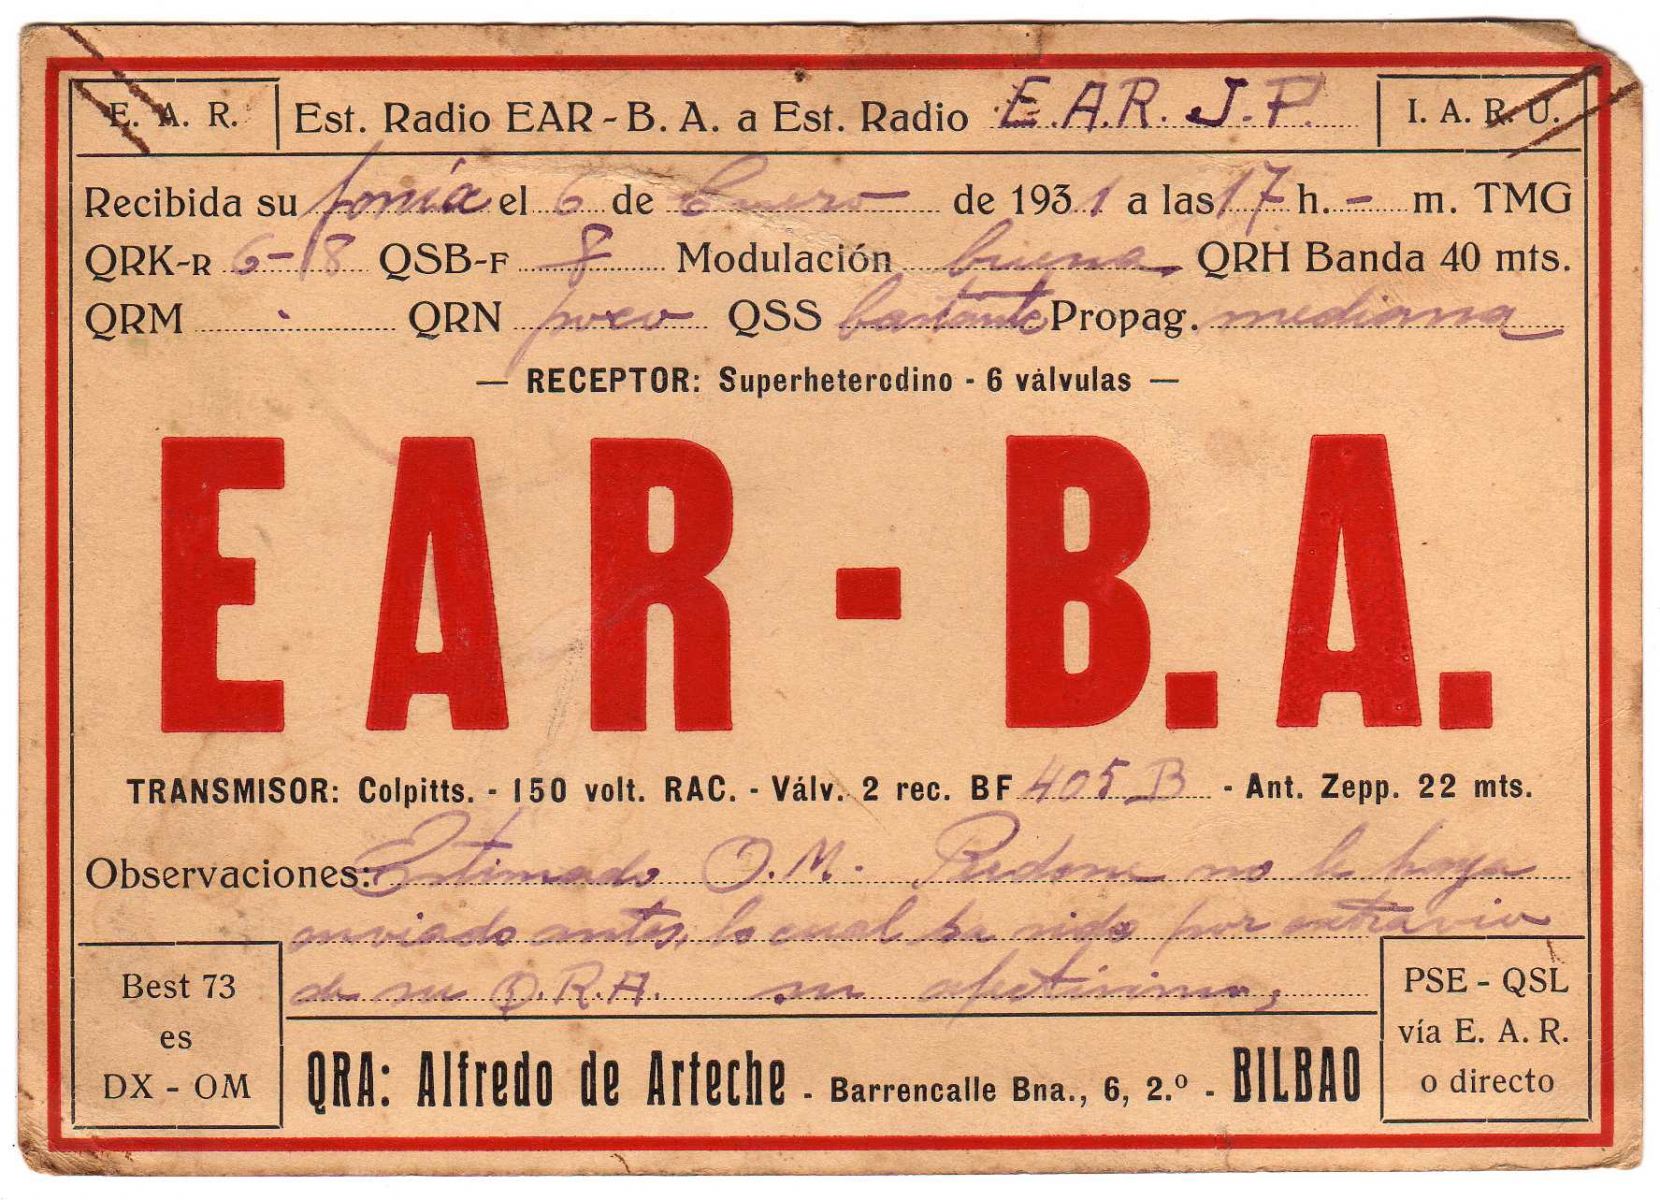 EAR-BA